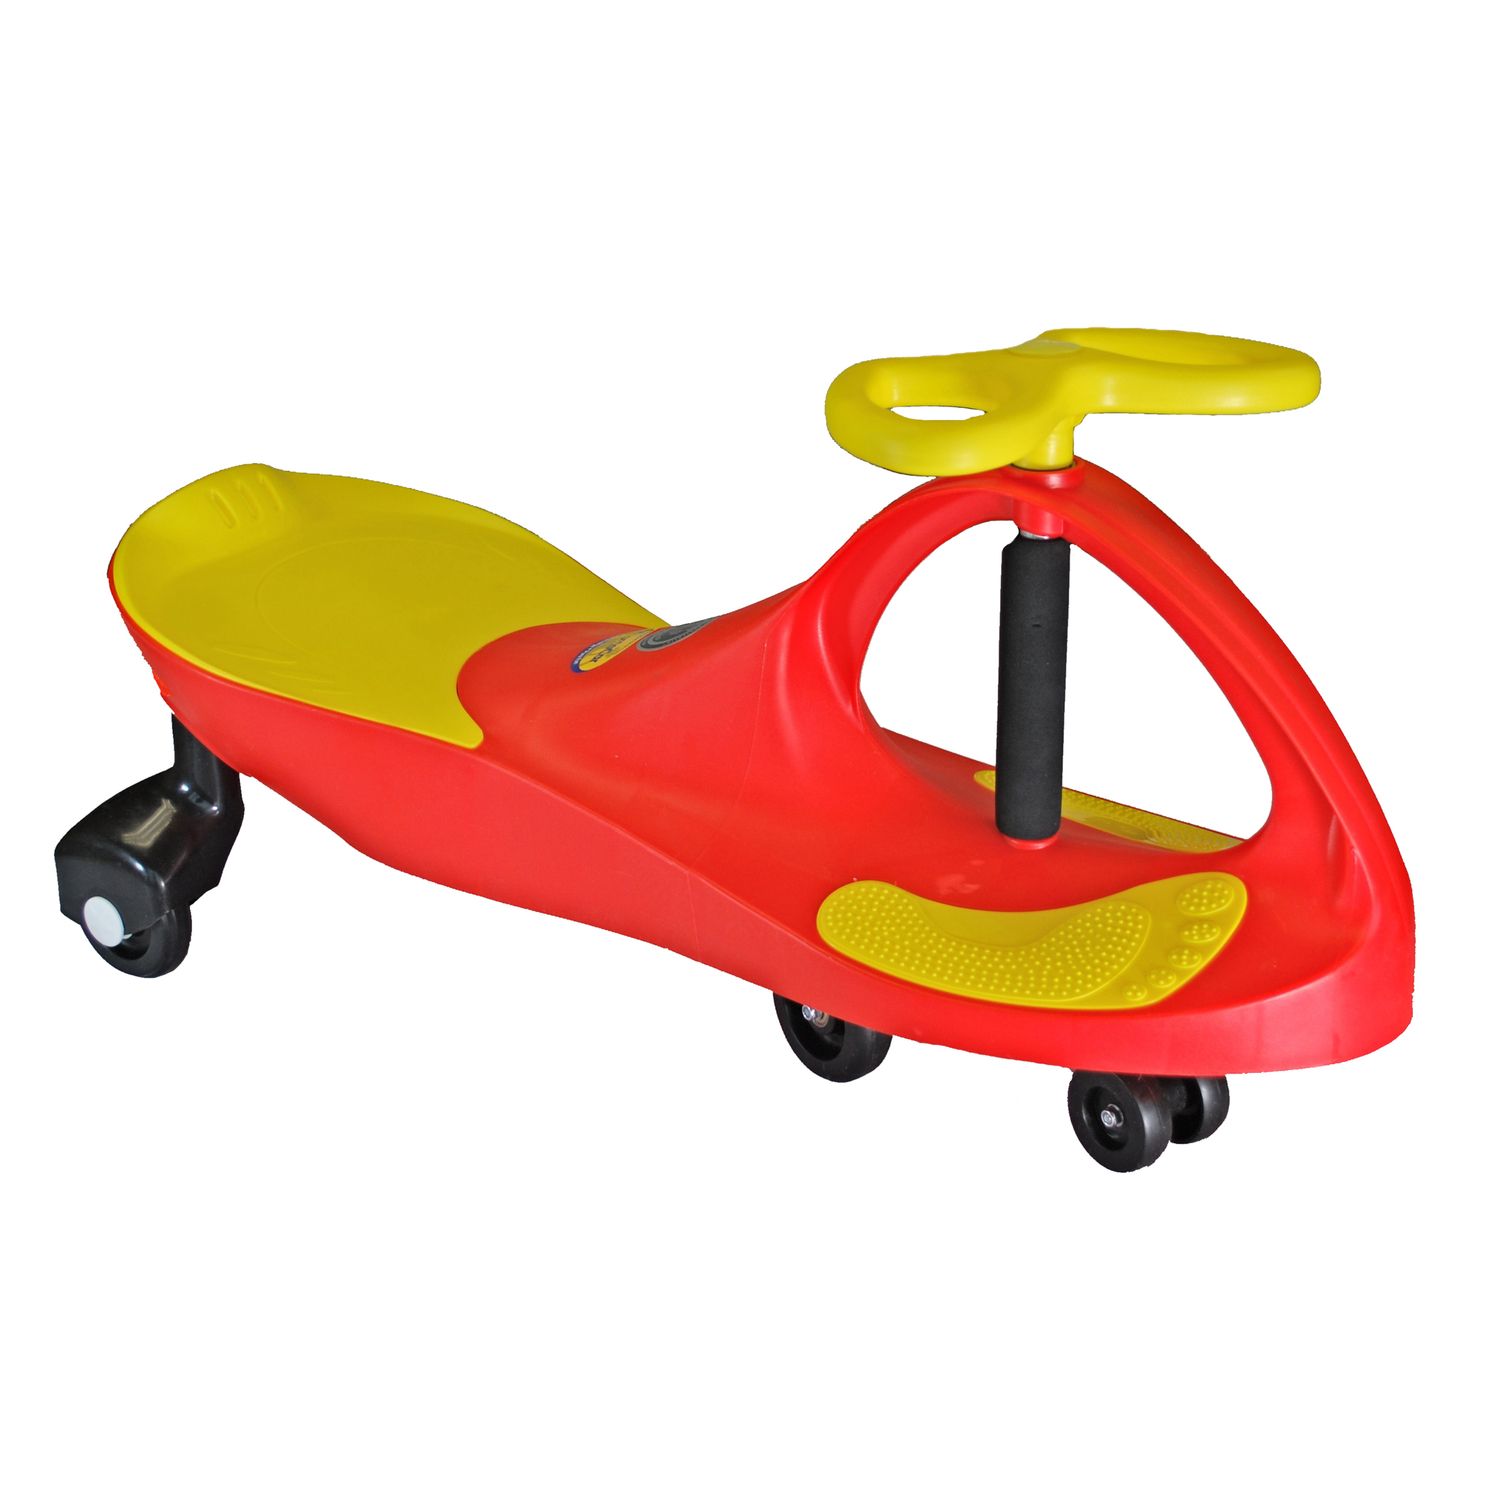 plasmacar ride on toy